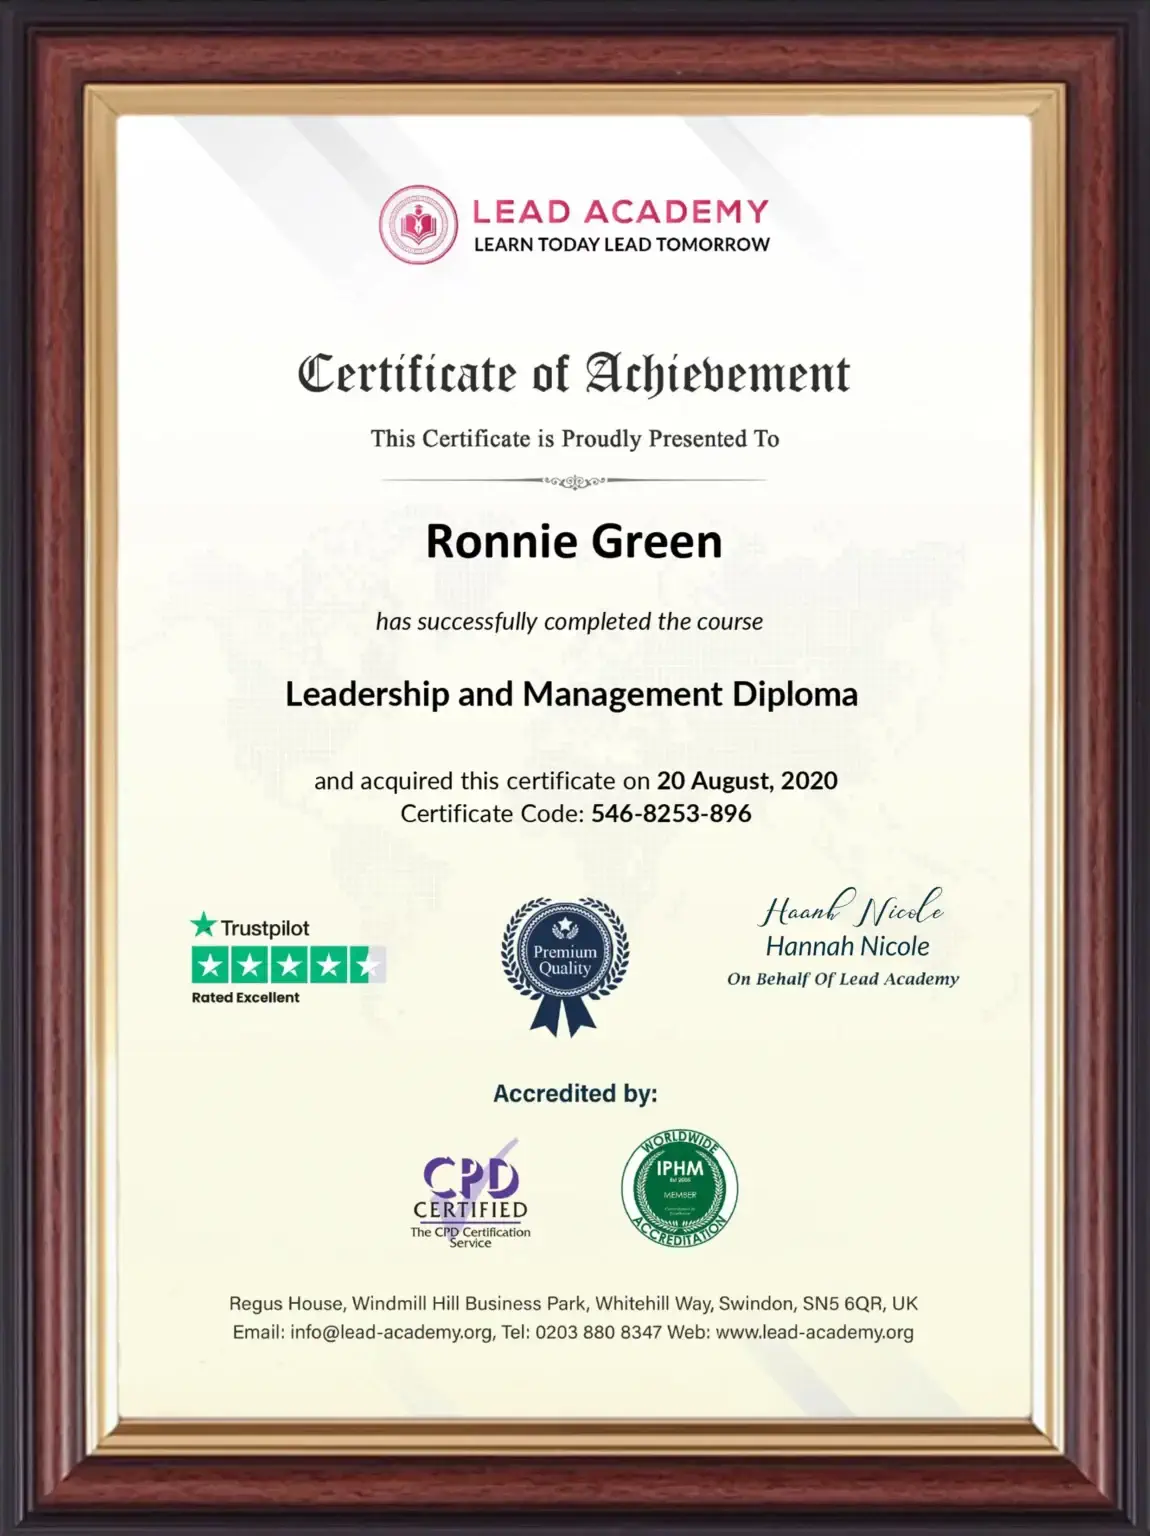 Lead-Academy Certificate of Achievement